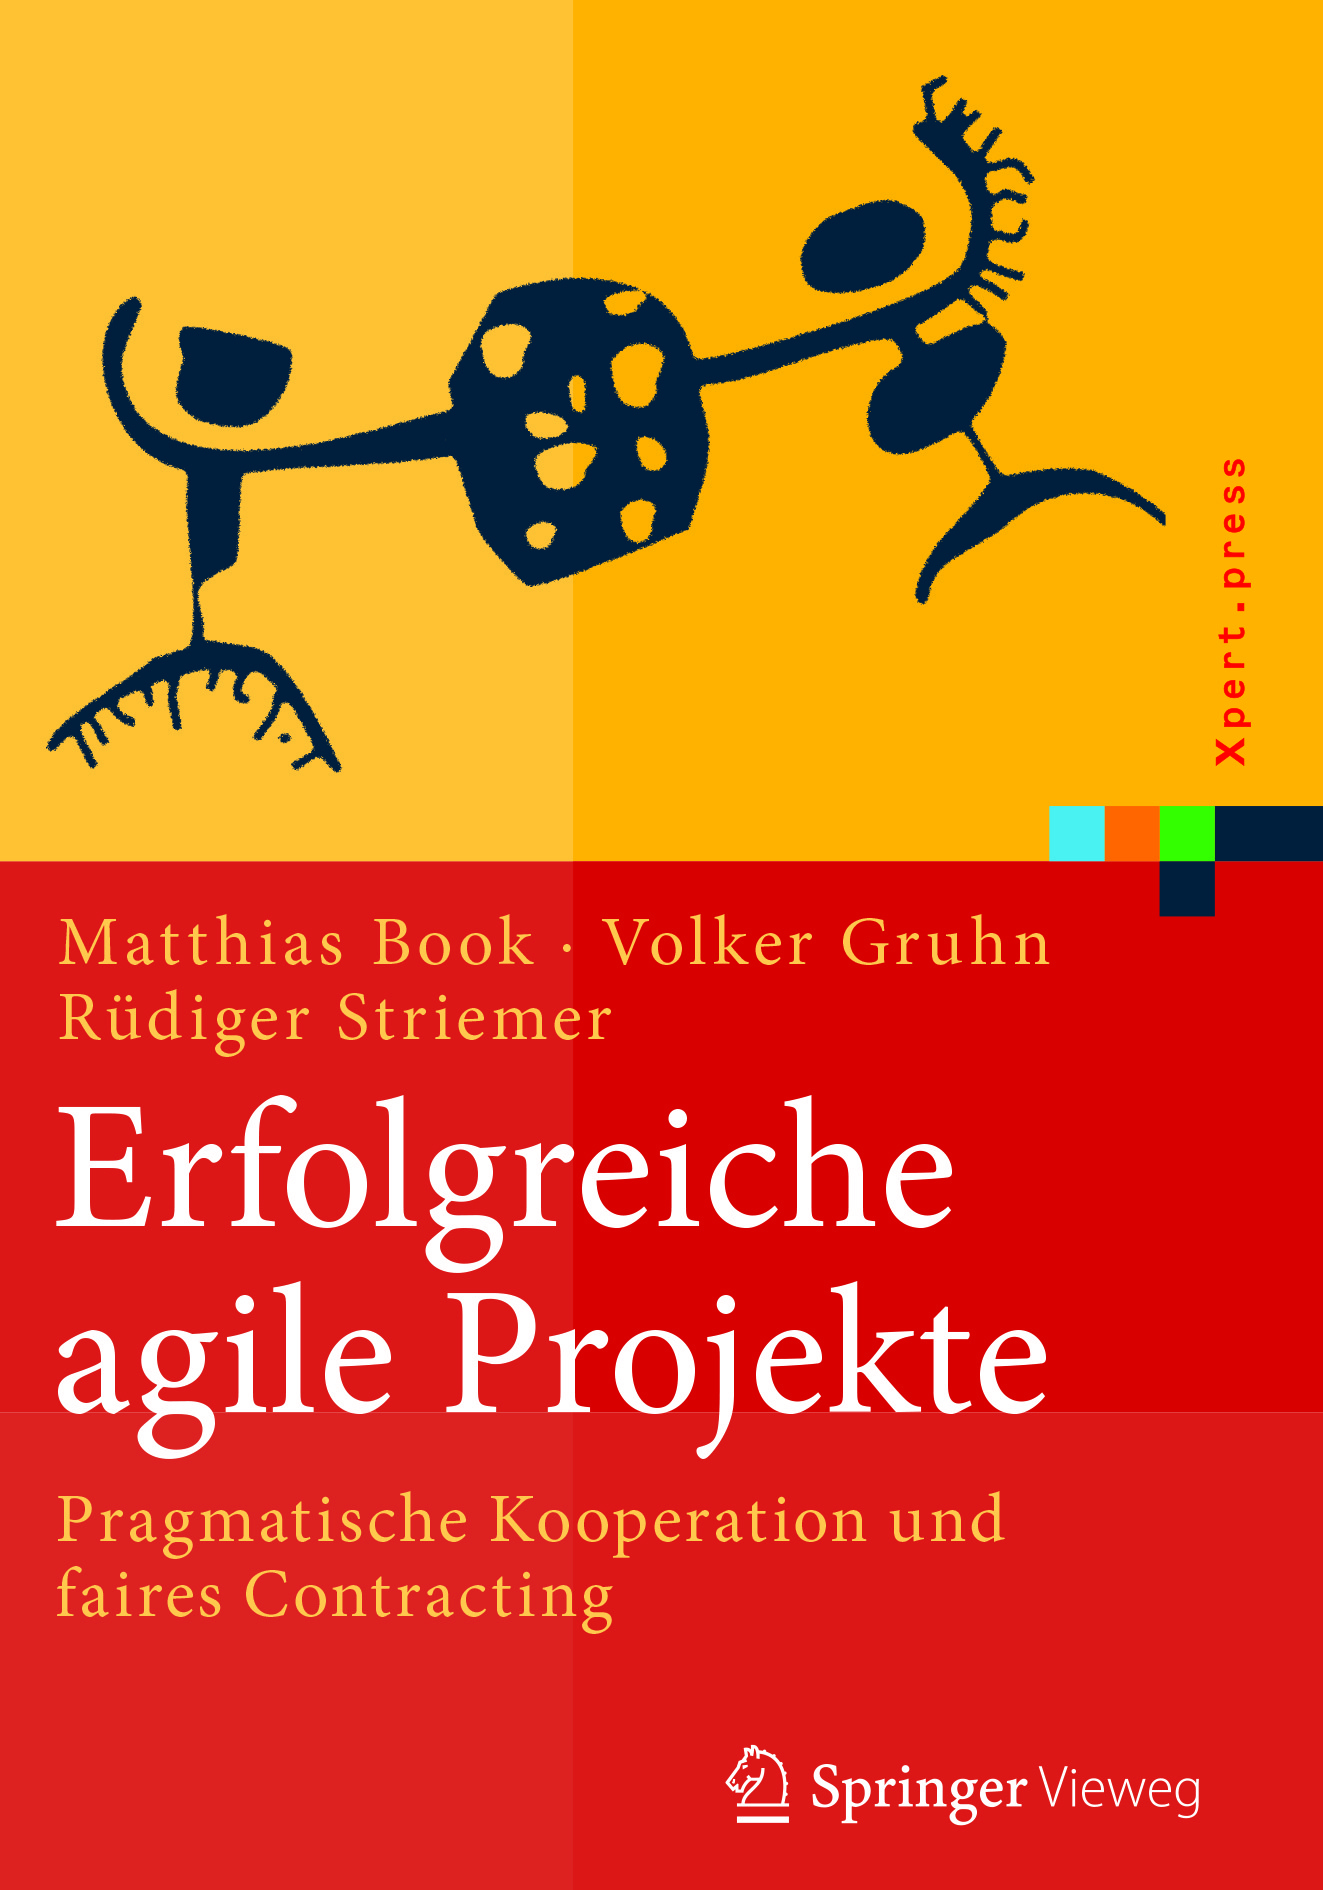 Book, Matthias - Erfolgreiche agile Projekte, ebook